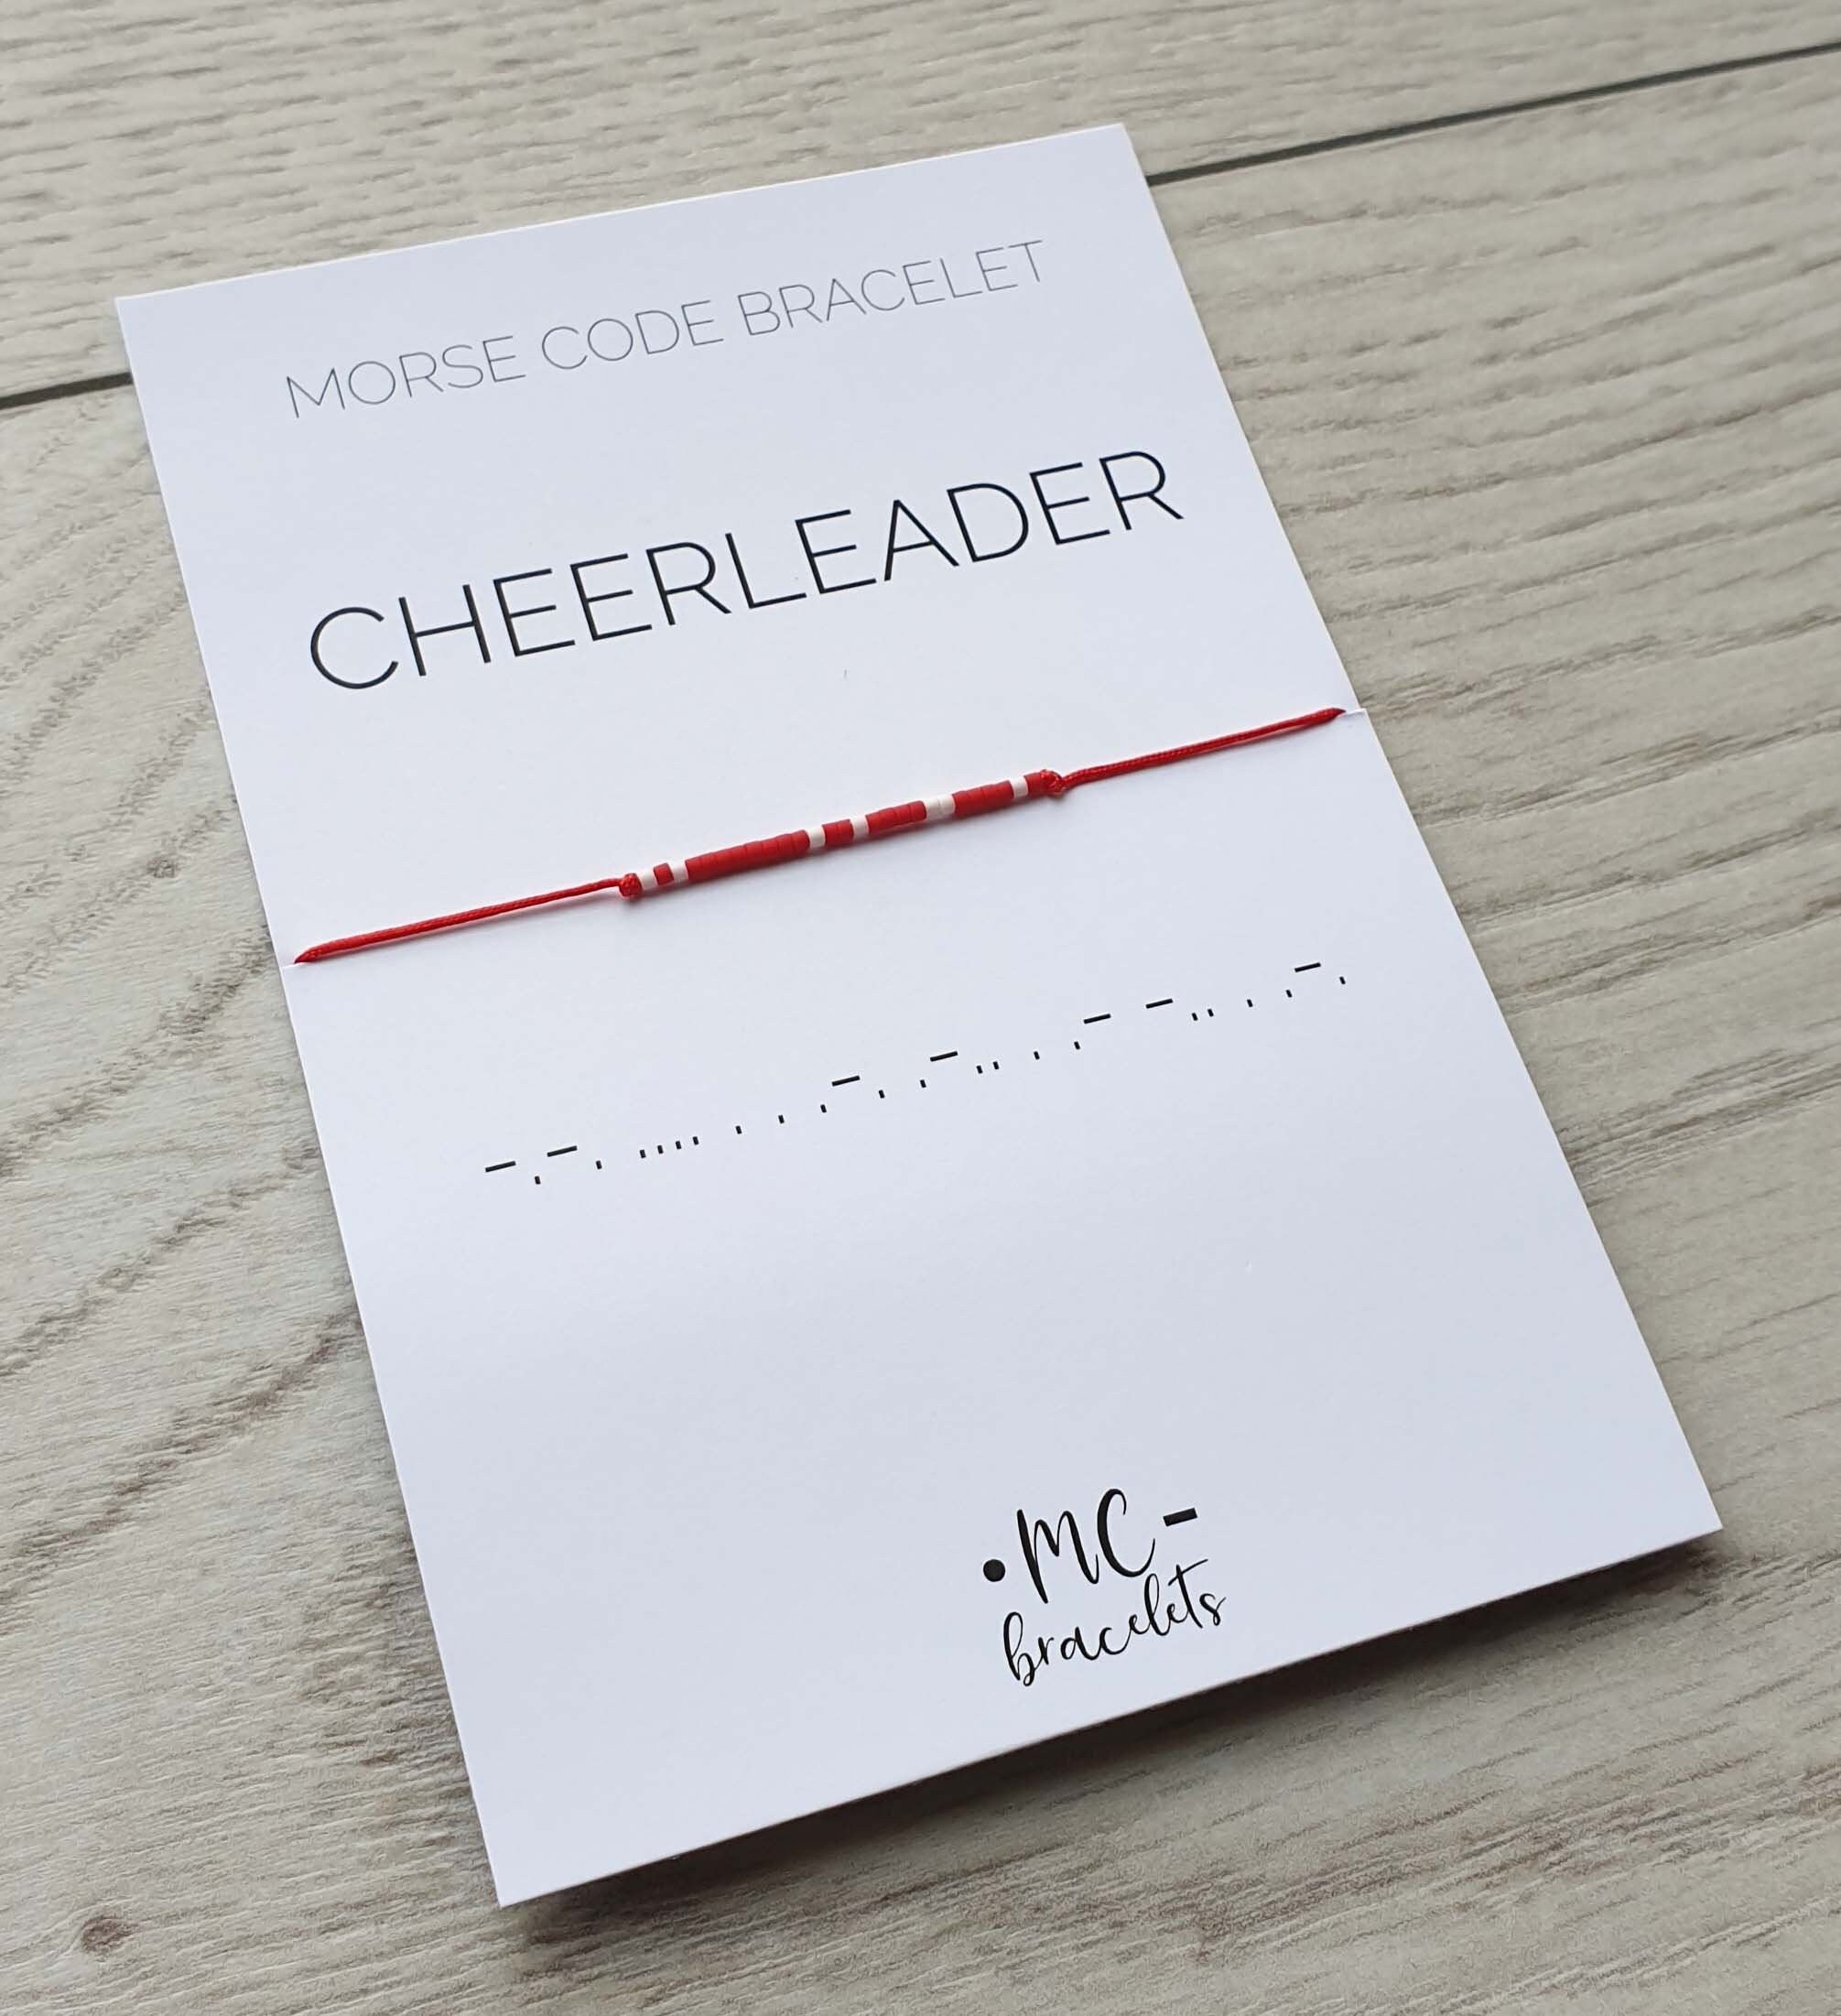 Cheerleader’s Morse Code Bracelet 